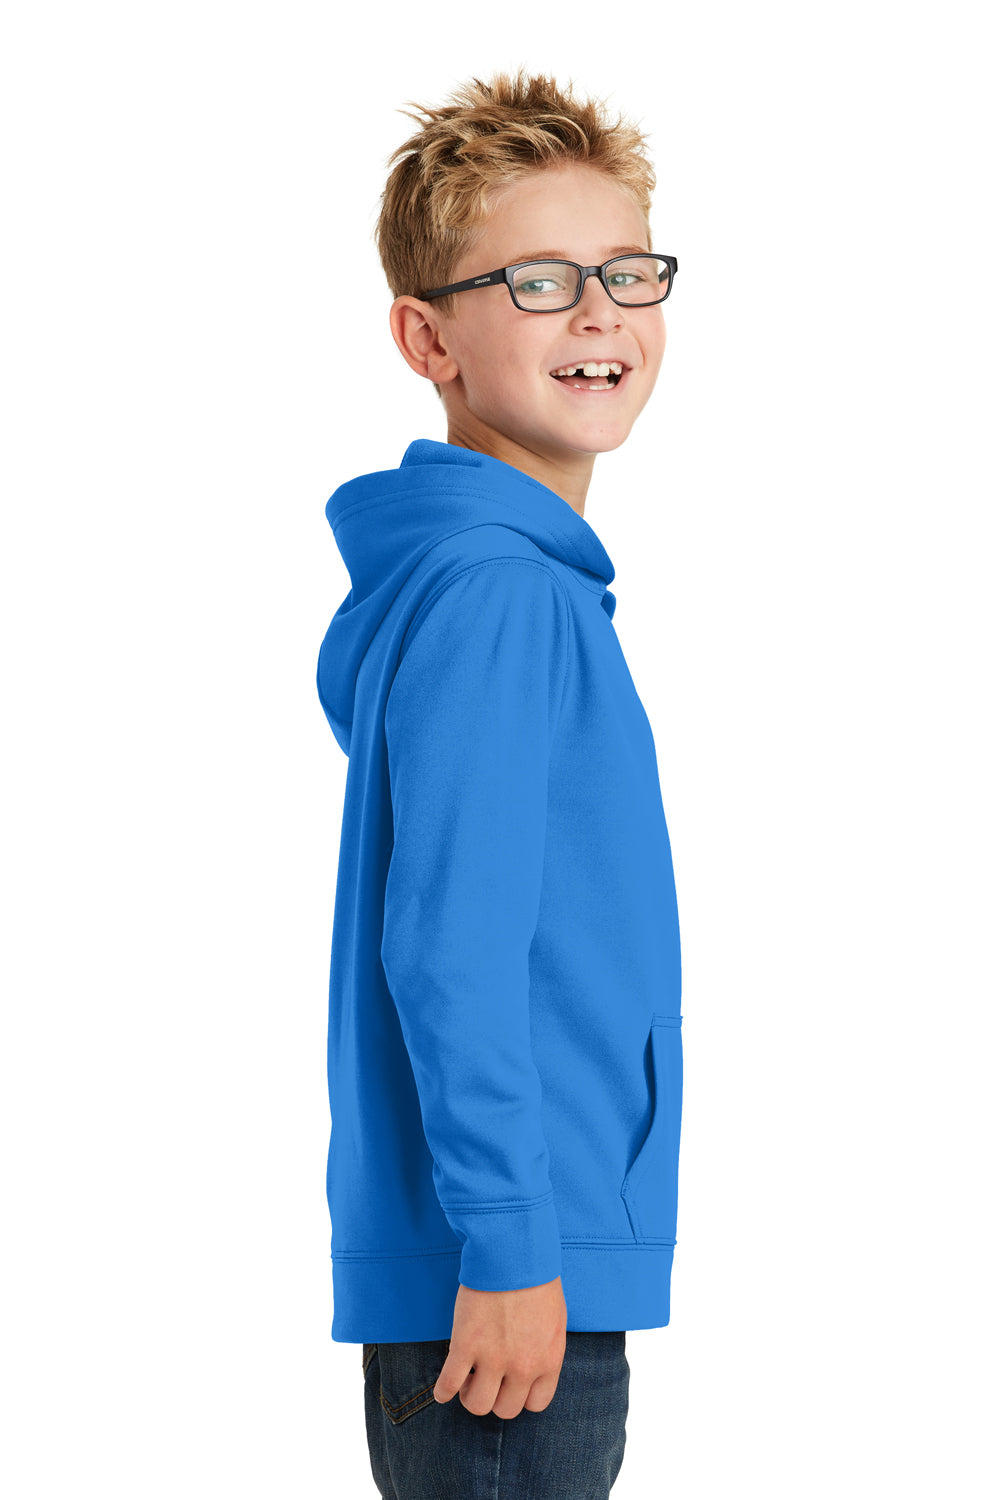 Port & Company PC590YH Youth Dry Zone Performance Moisture Wicking Fleece Hooded Sweatshirt Hoodie Royal Blue Side